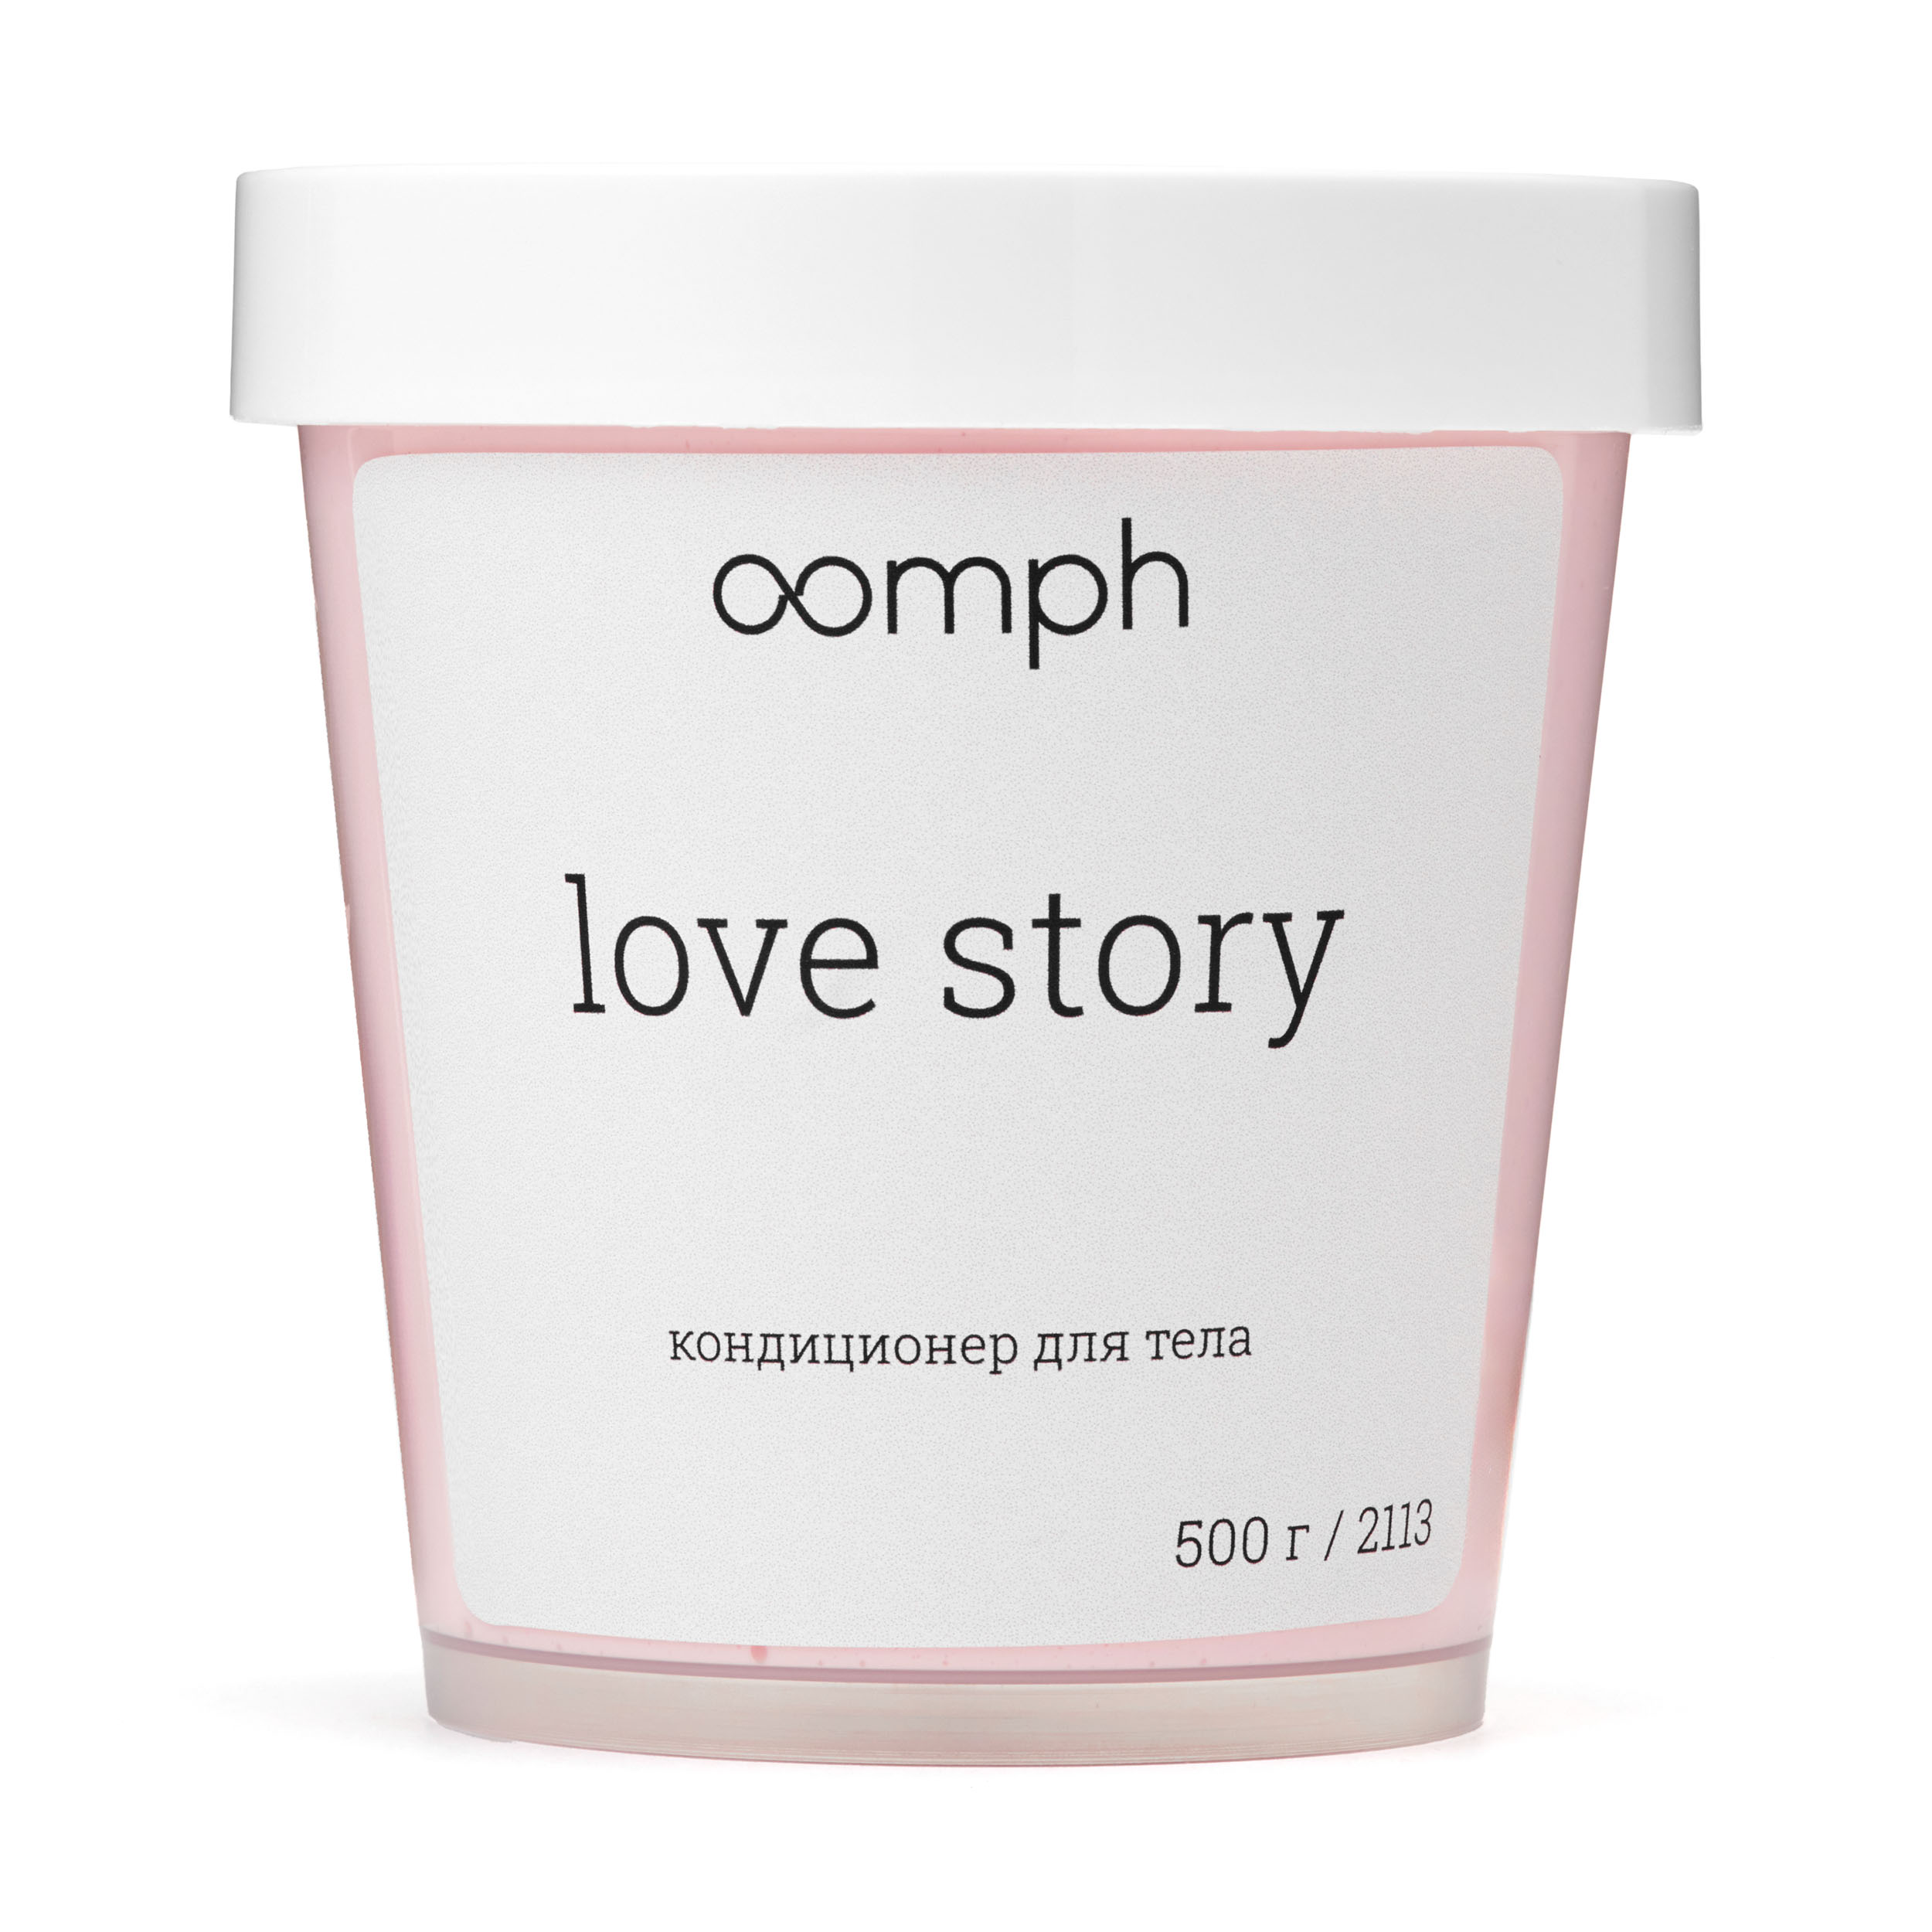 Кондиционер для тела OOMPH Love story 500г